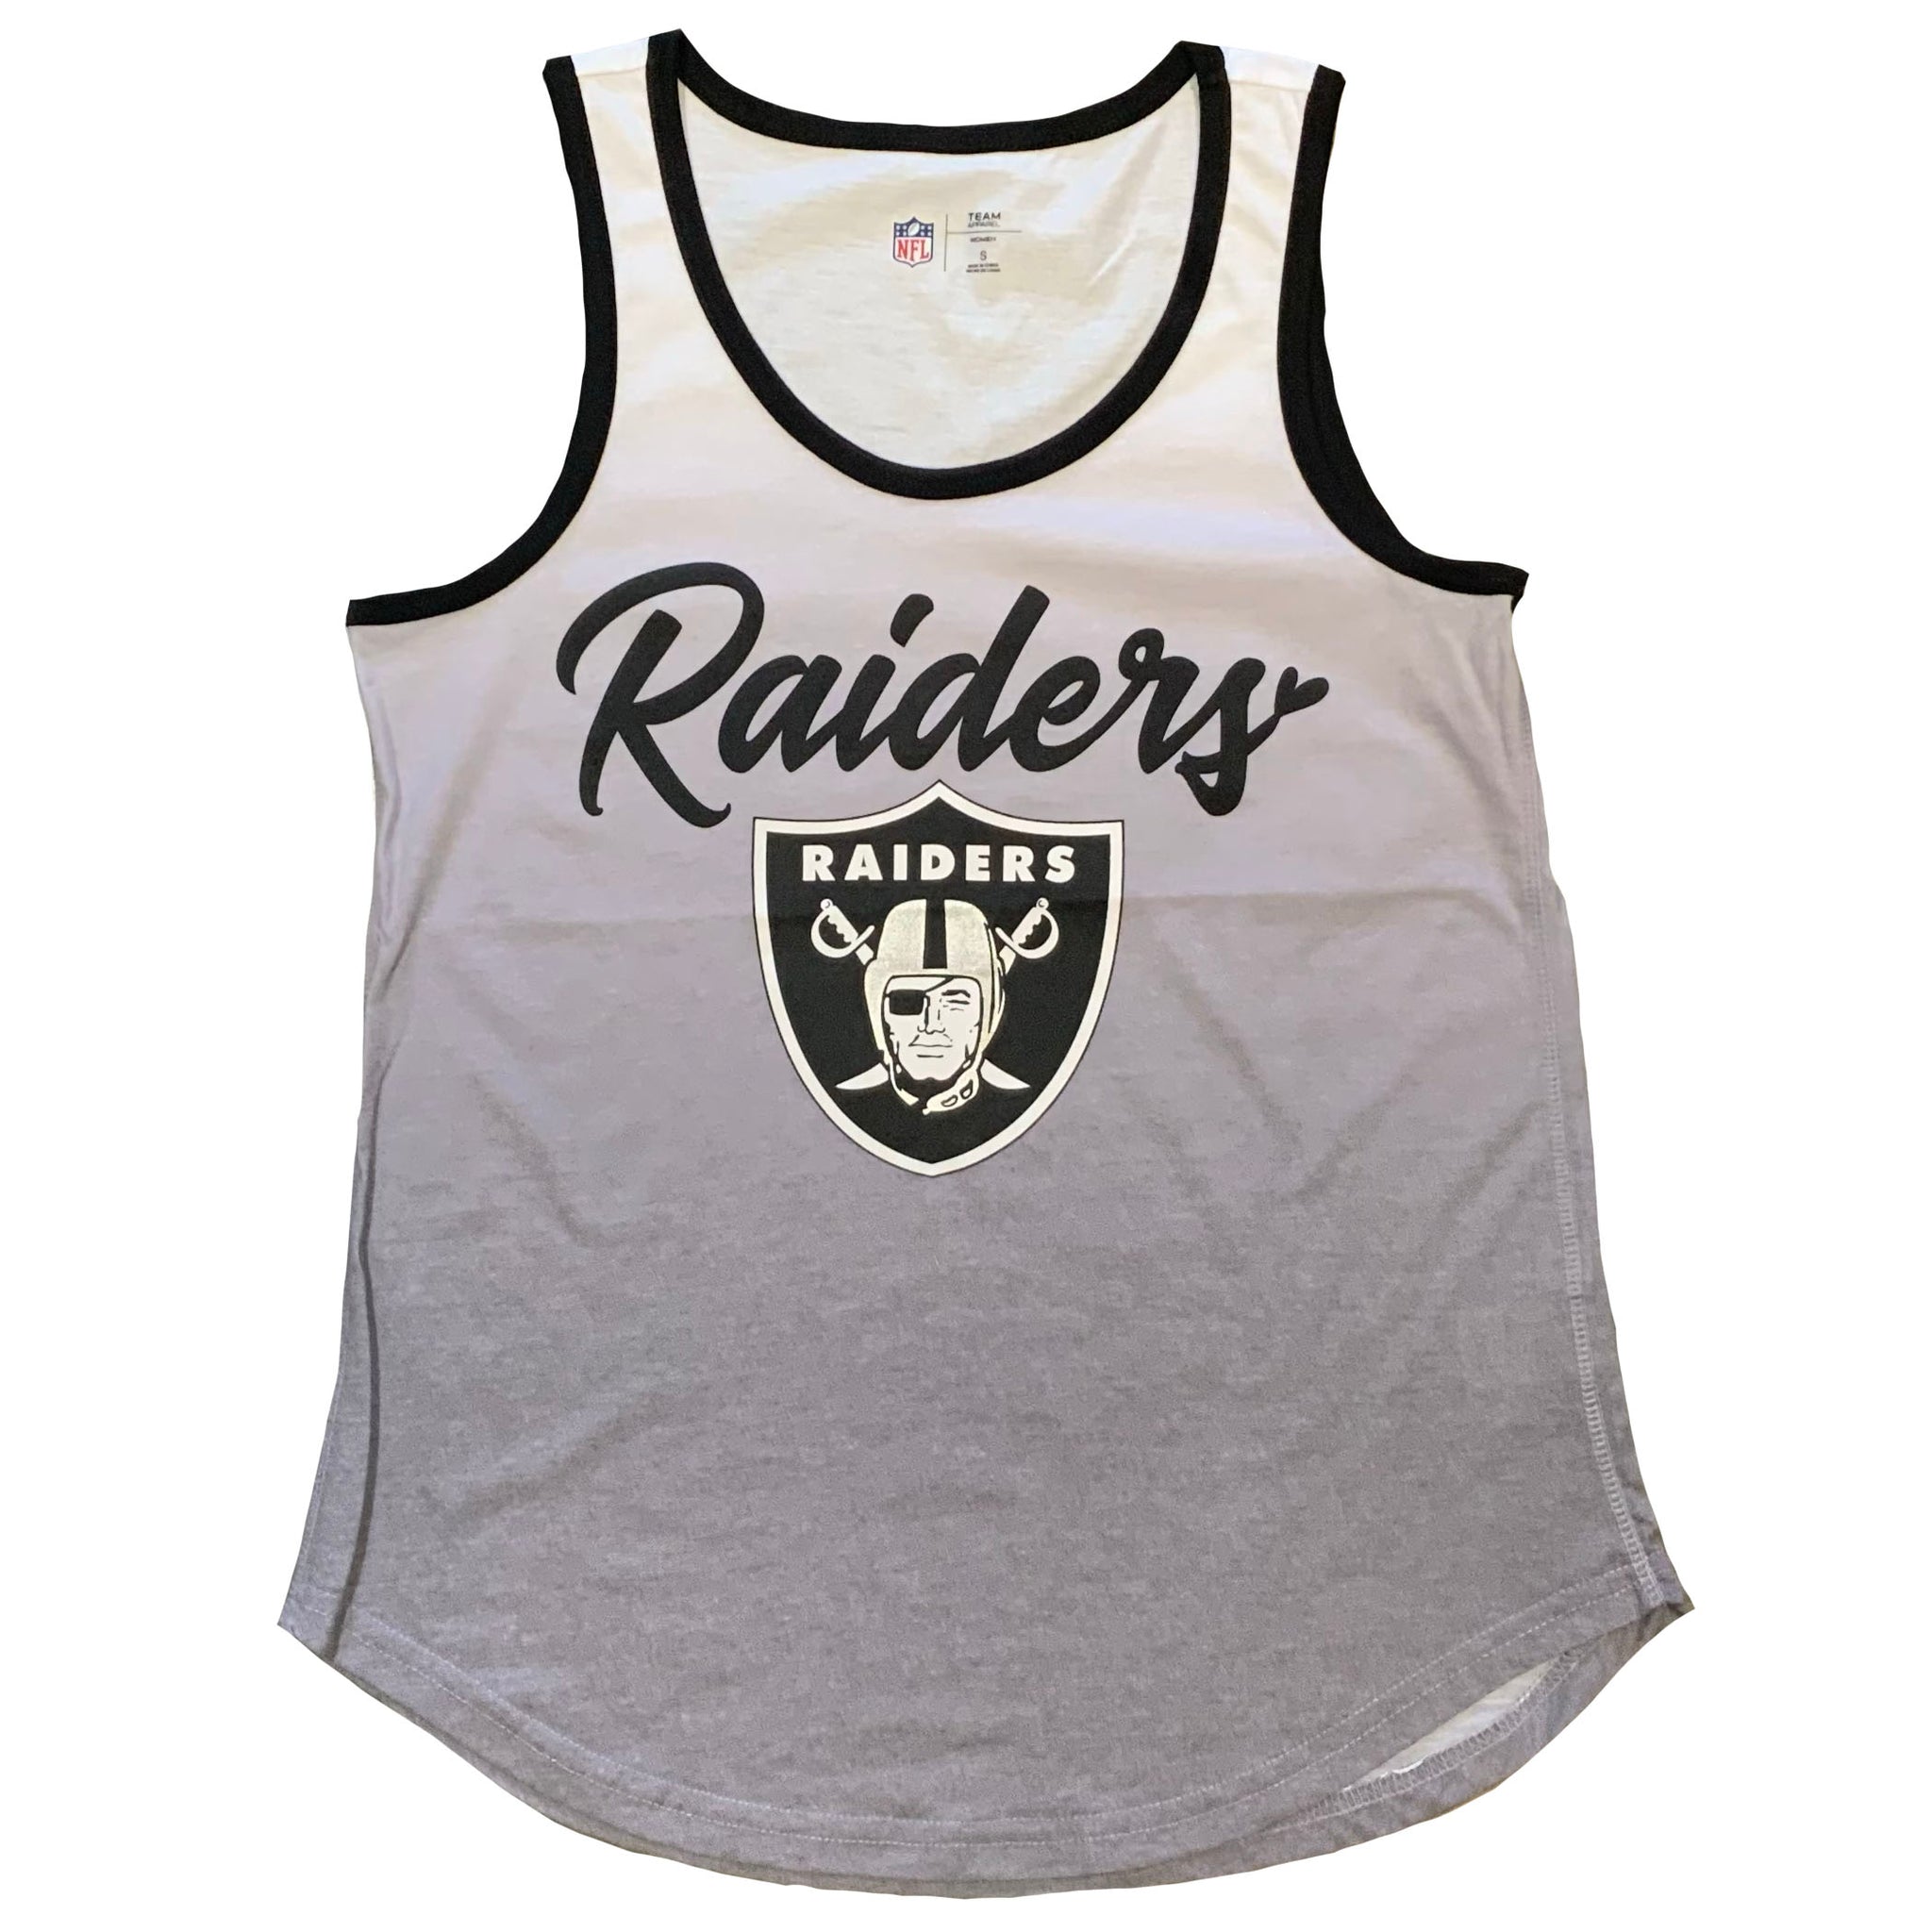 raiders jersey tank top